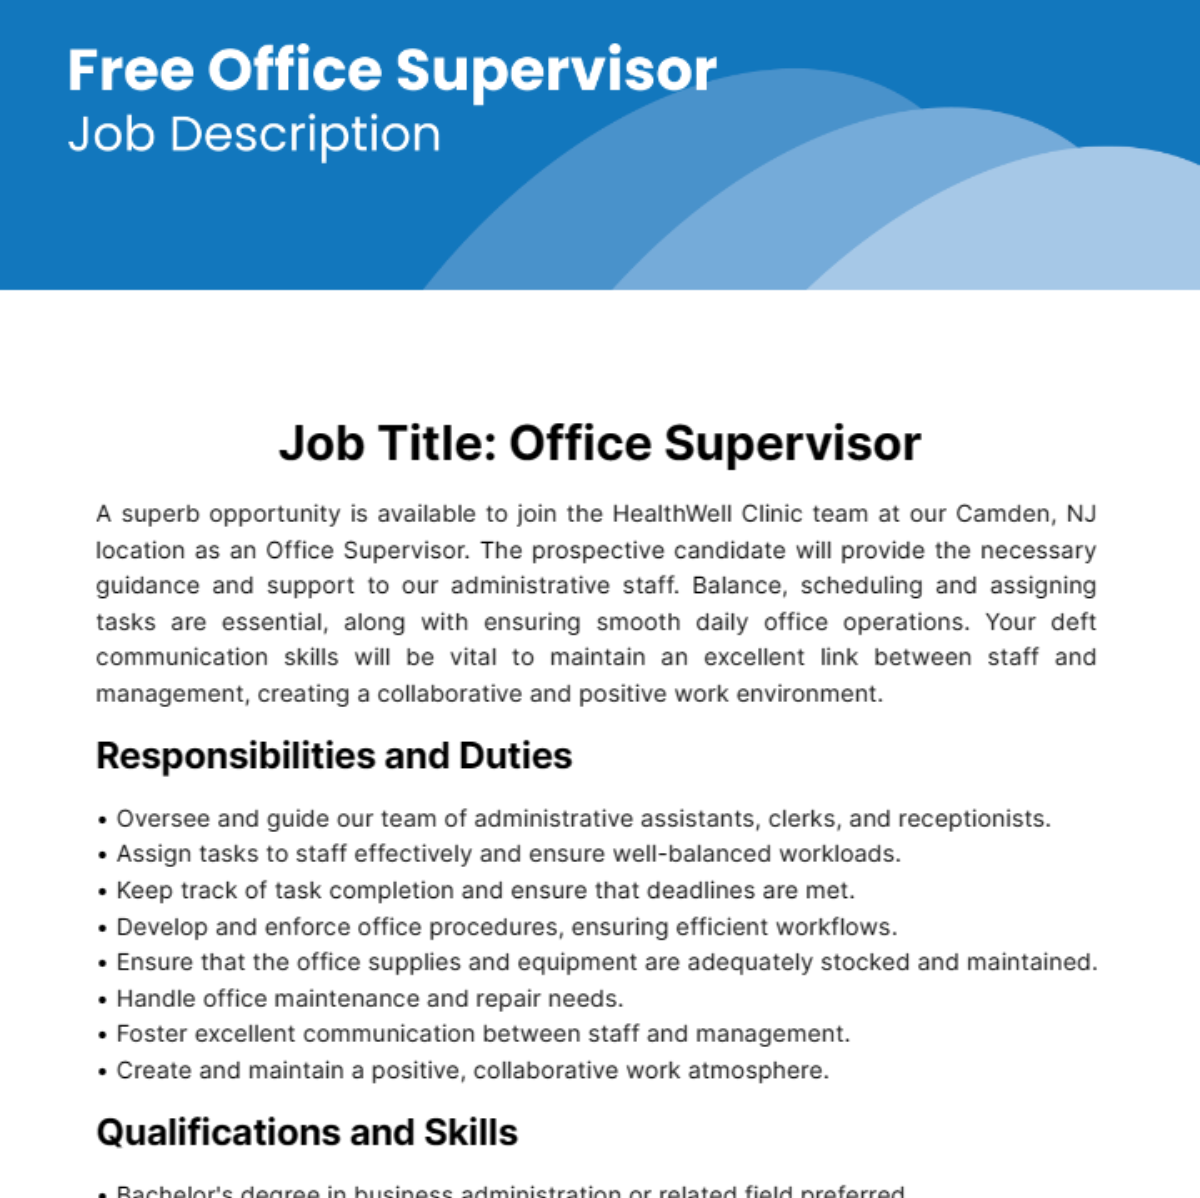 Free Office Supervisor Job Description Template